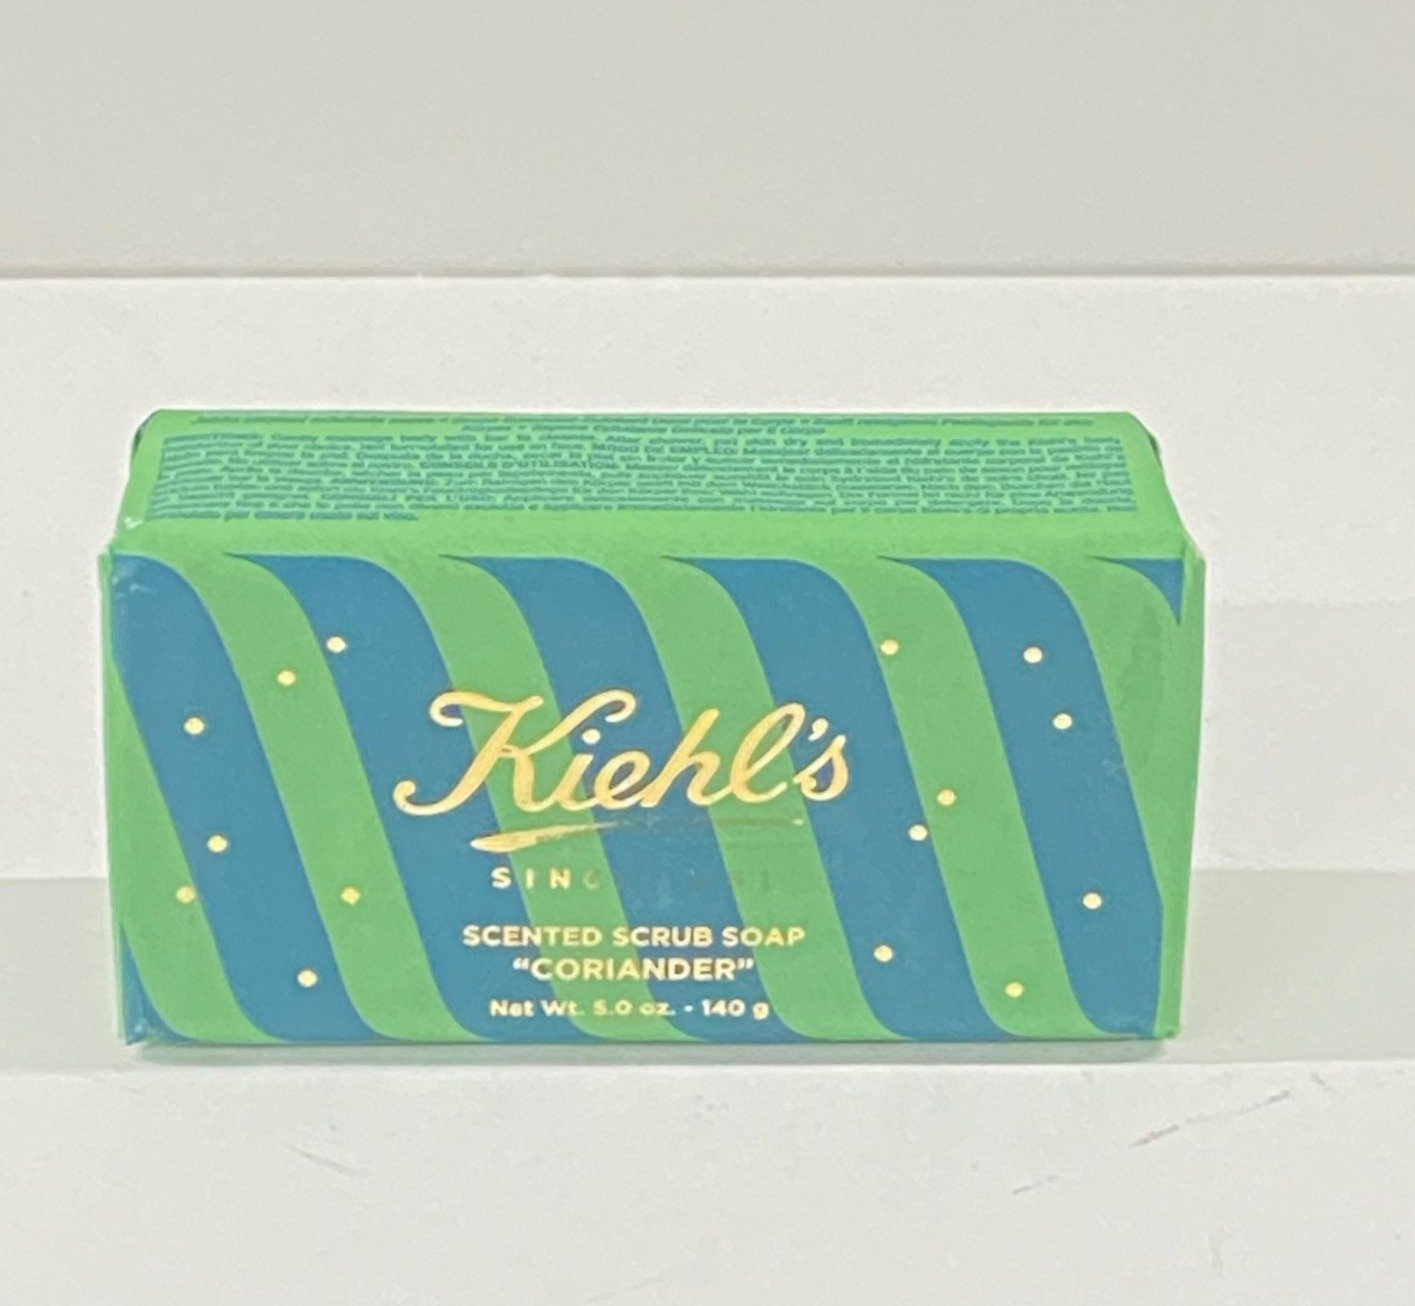 Kiehl's Coriander Hand Soap 5 oz. Limted Edition Bannecker - BRAND NEW Soap Bar! - $15.95